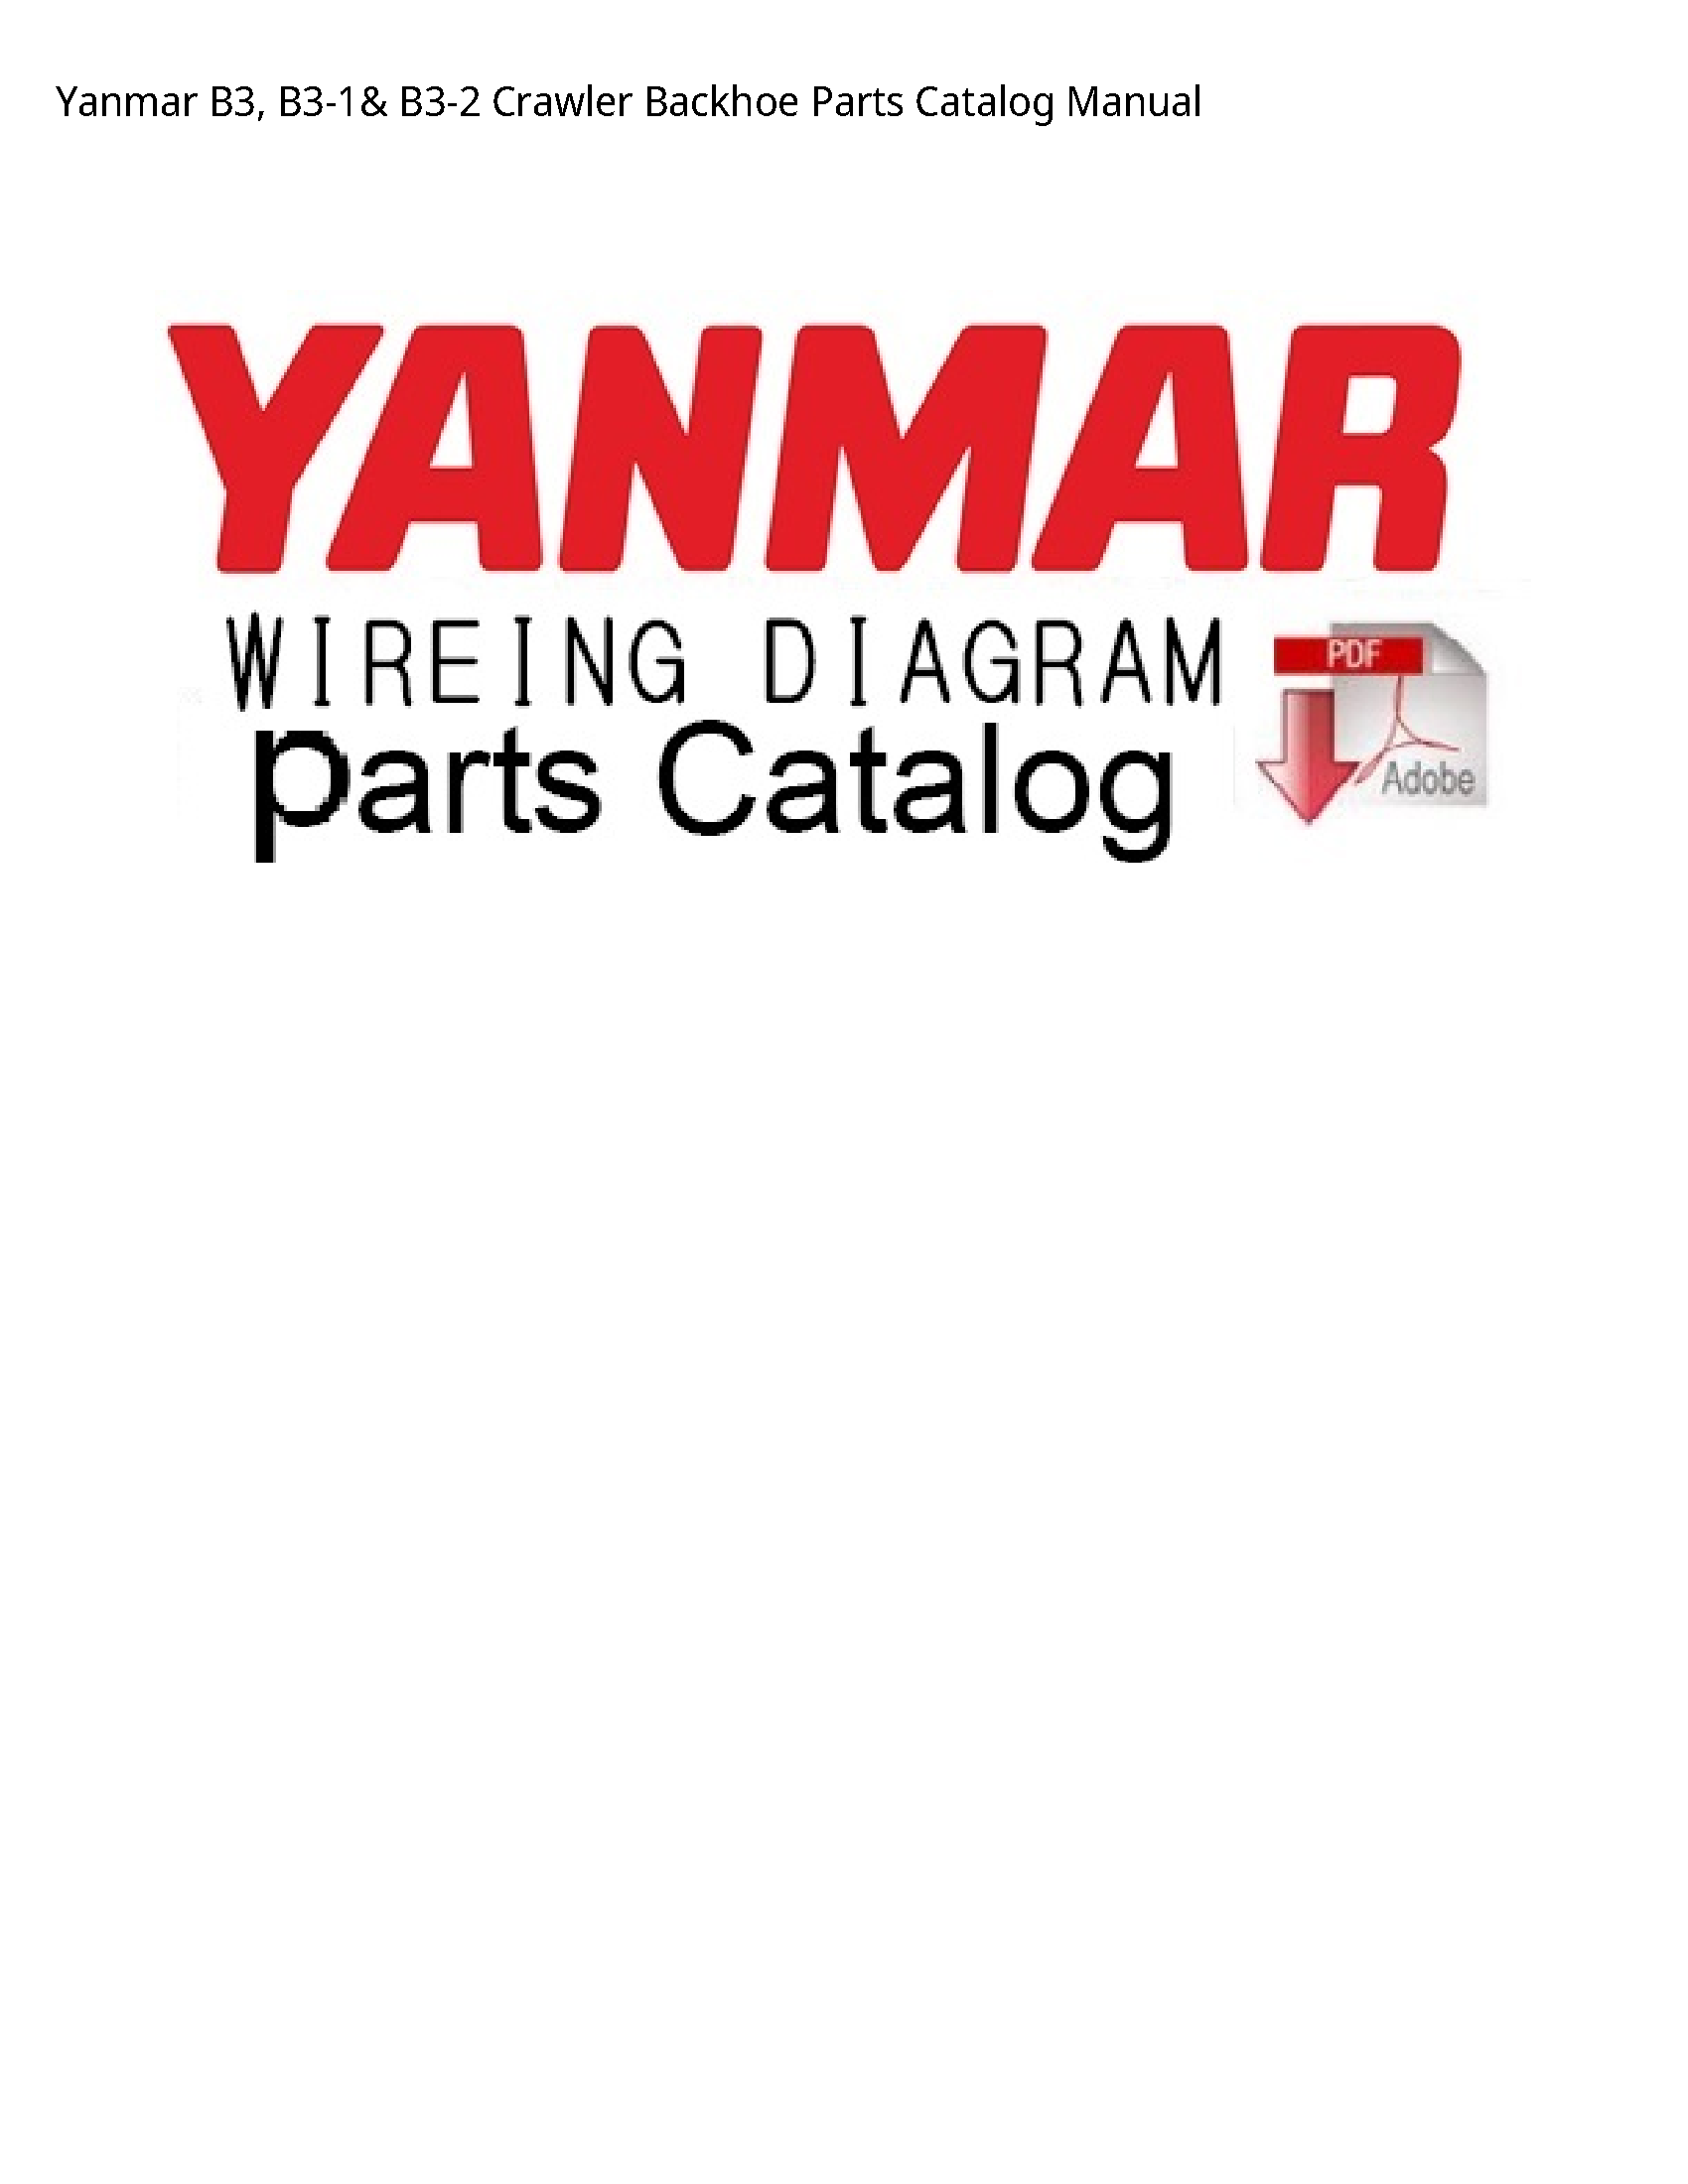 Yanmar B3 Crawler Backhoe Parts Catalog manual